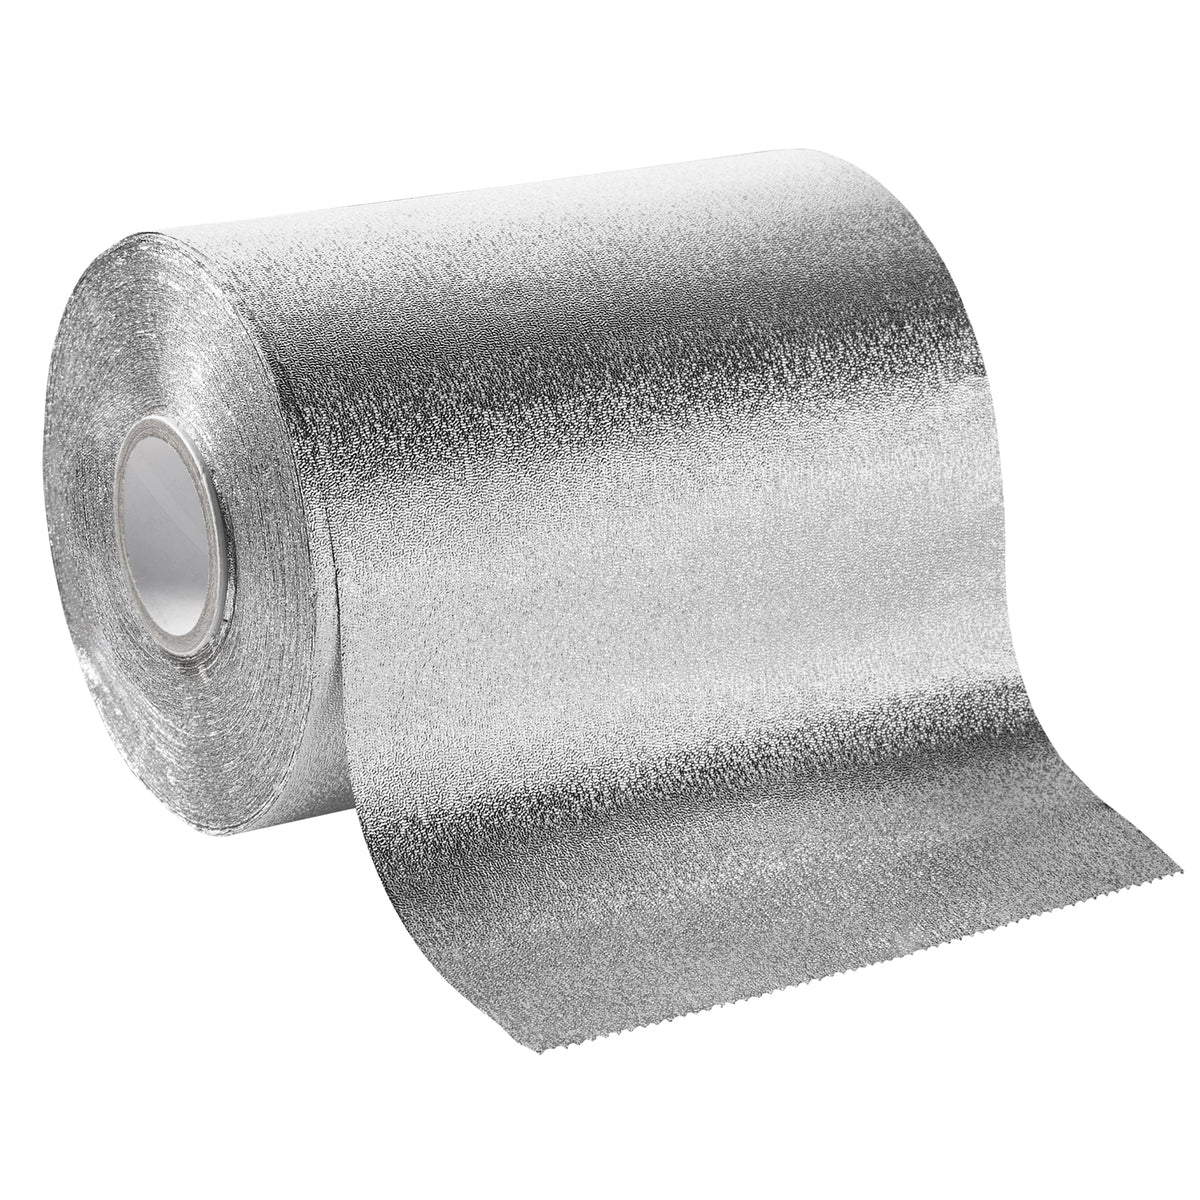 BaBylissPRO Aluminum Coloring Foil Roll, 295 Feet